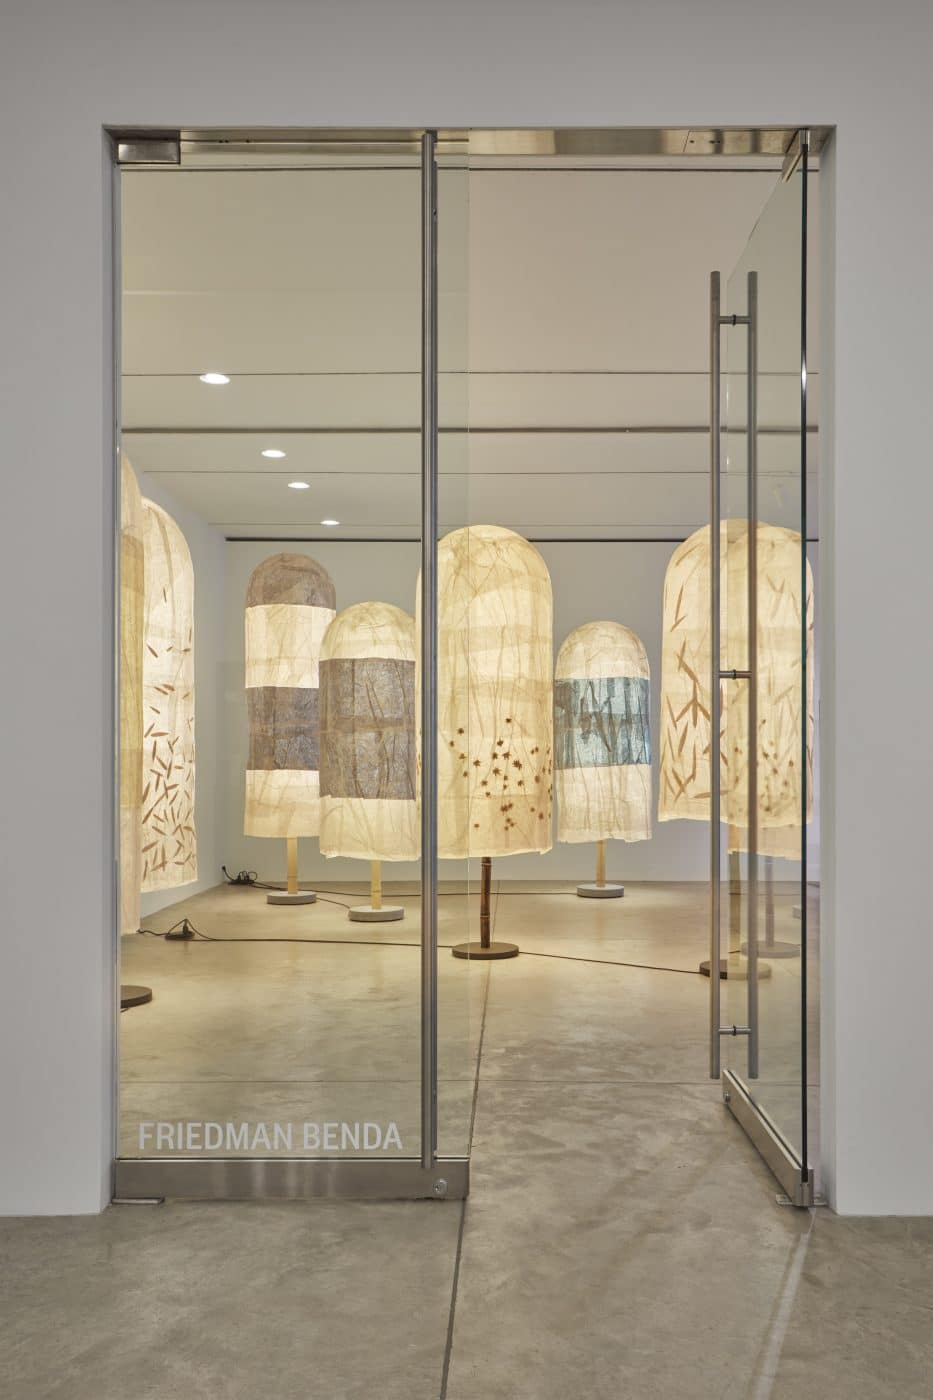 A group of Andrea Branzi floor lamps seen through a glass doorway at Friedman Benda gallery